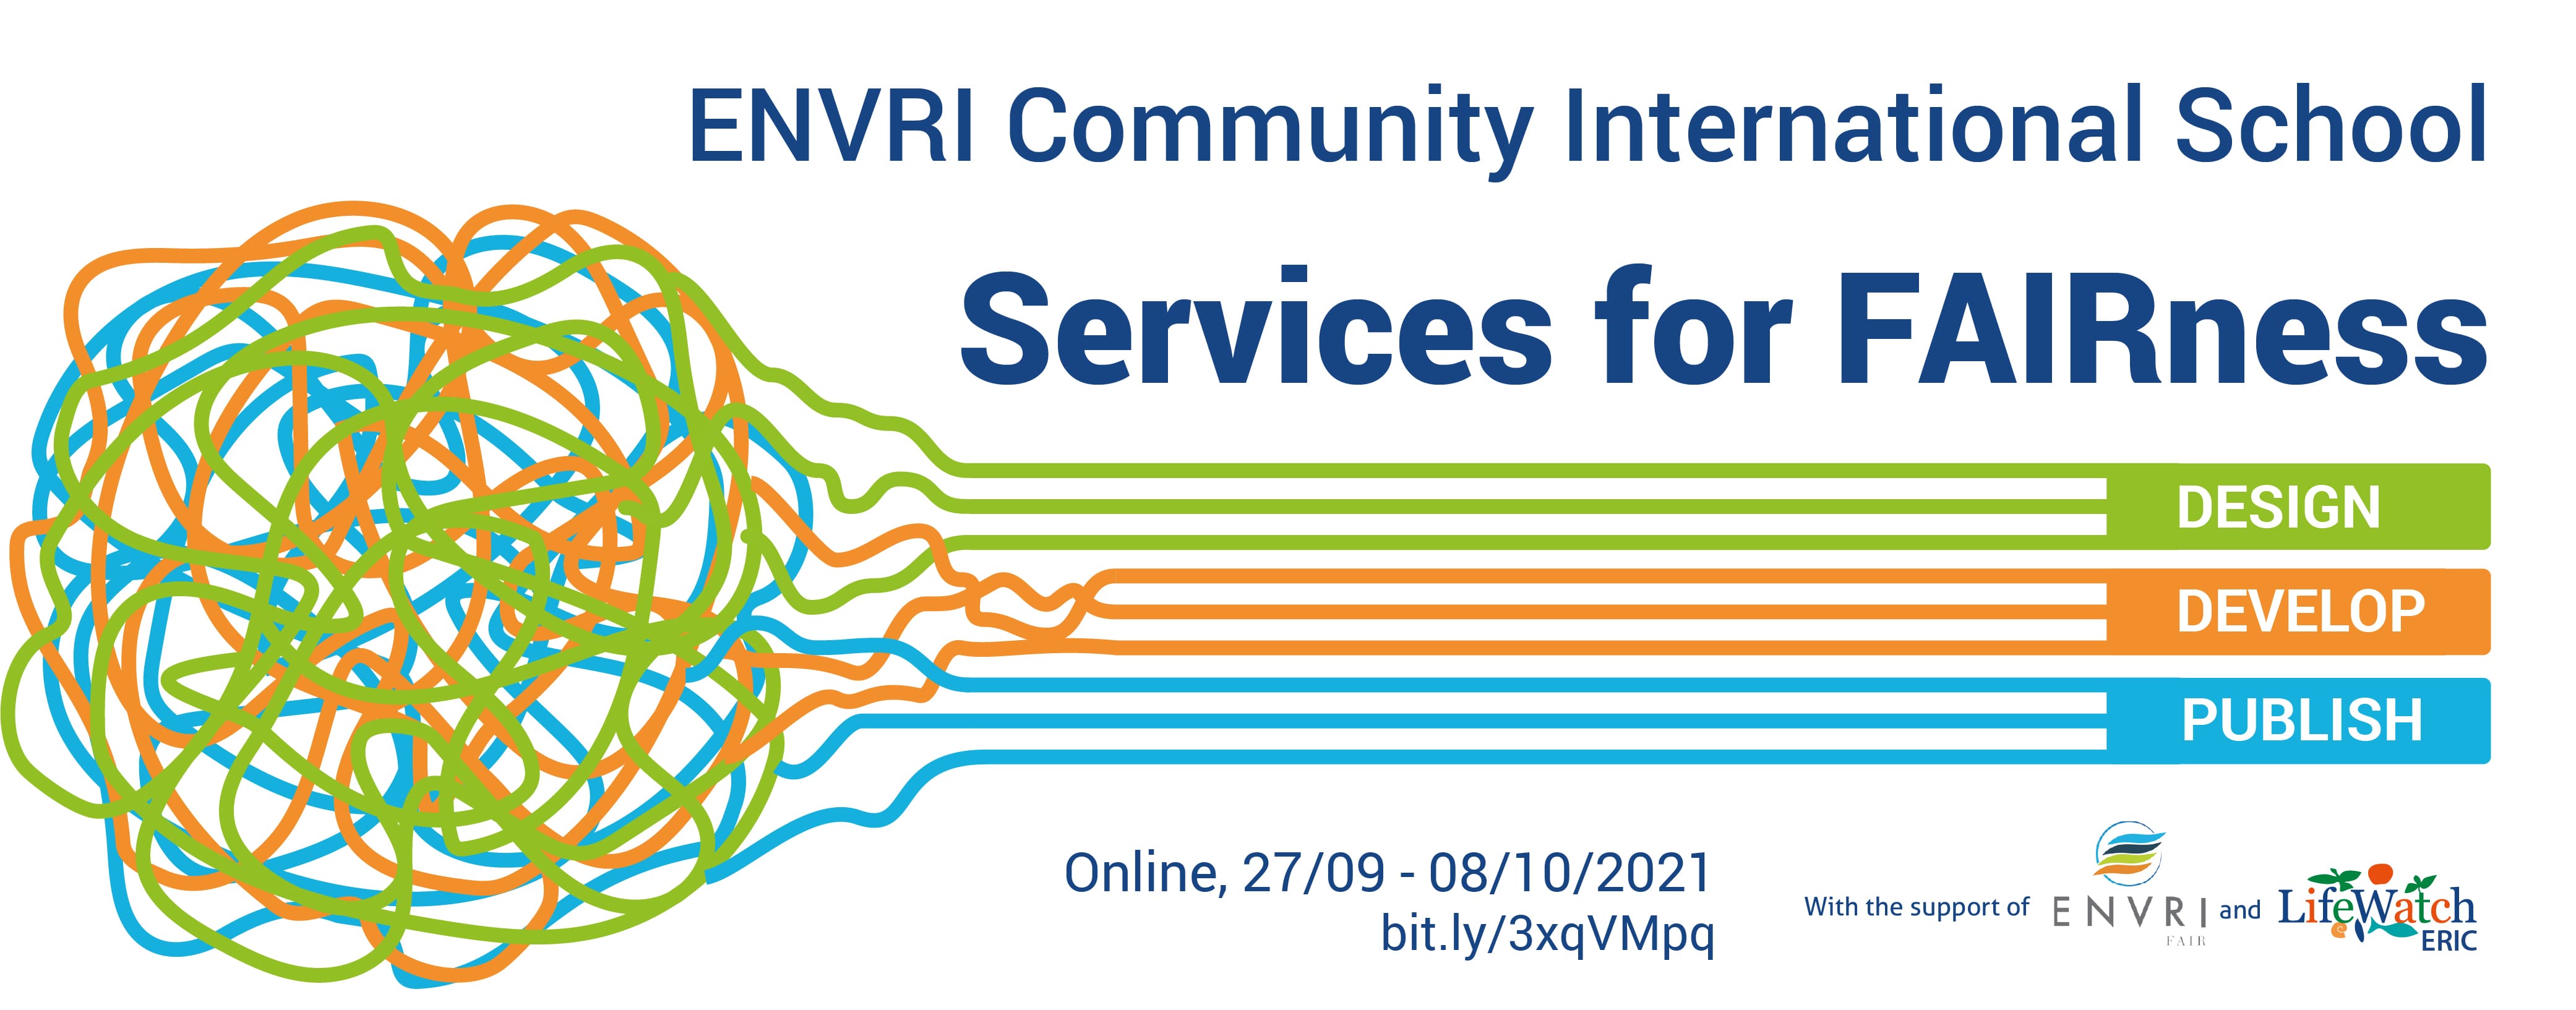 ENVRI Community International School Banner – Services for FAIRness